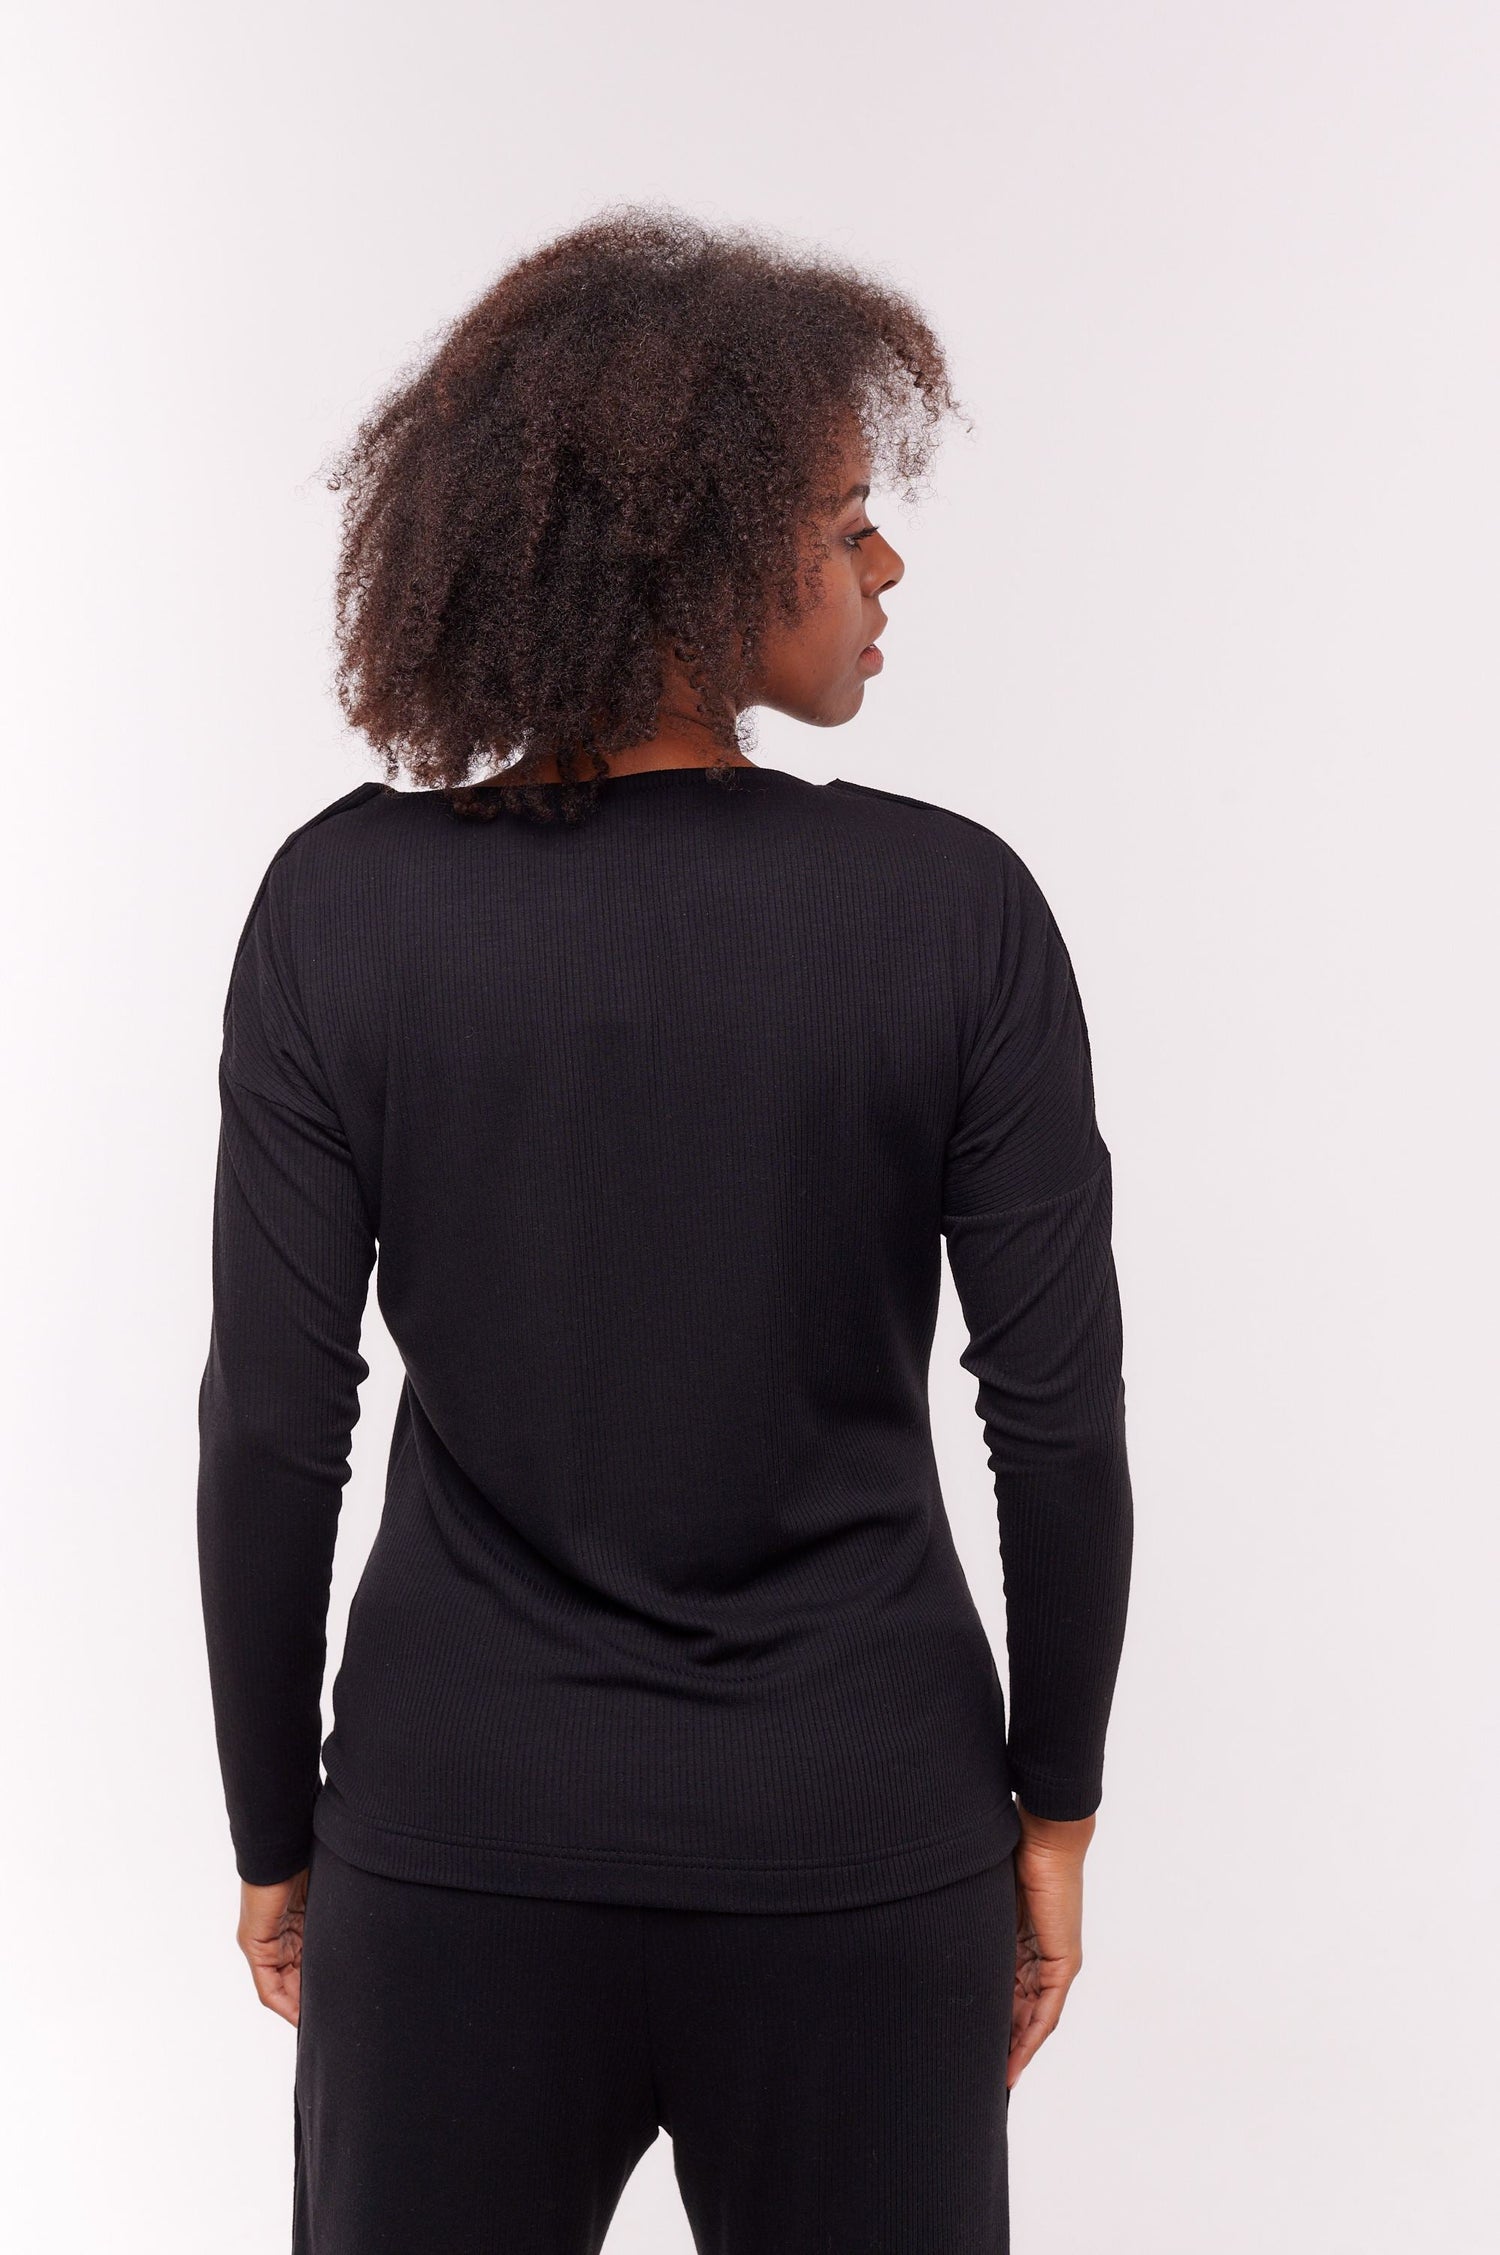 Woman facing backwards wearing black long sleeve top with shoulder snap closures.